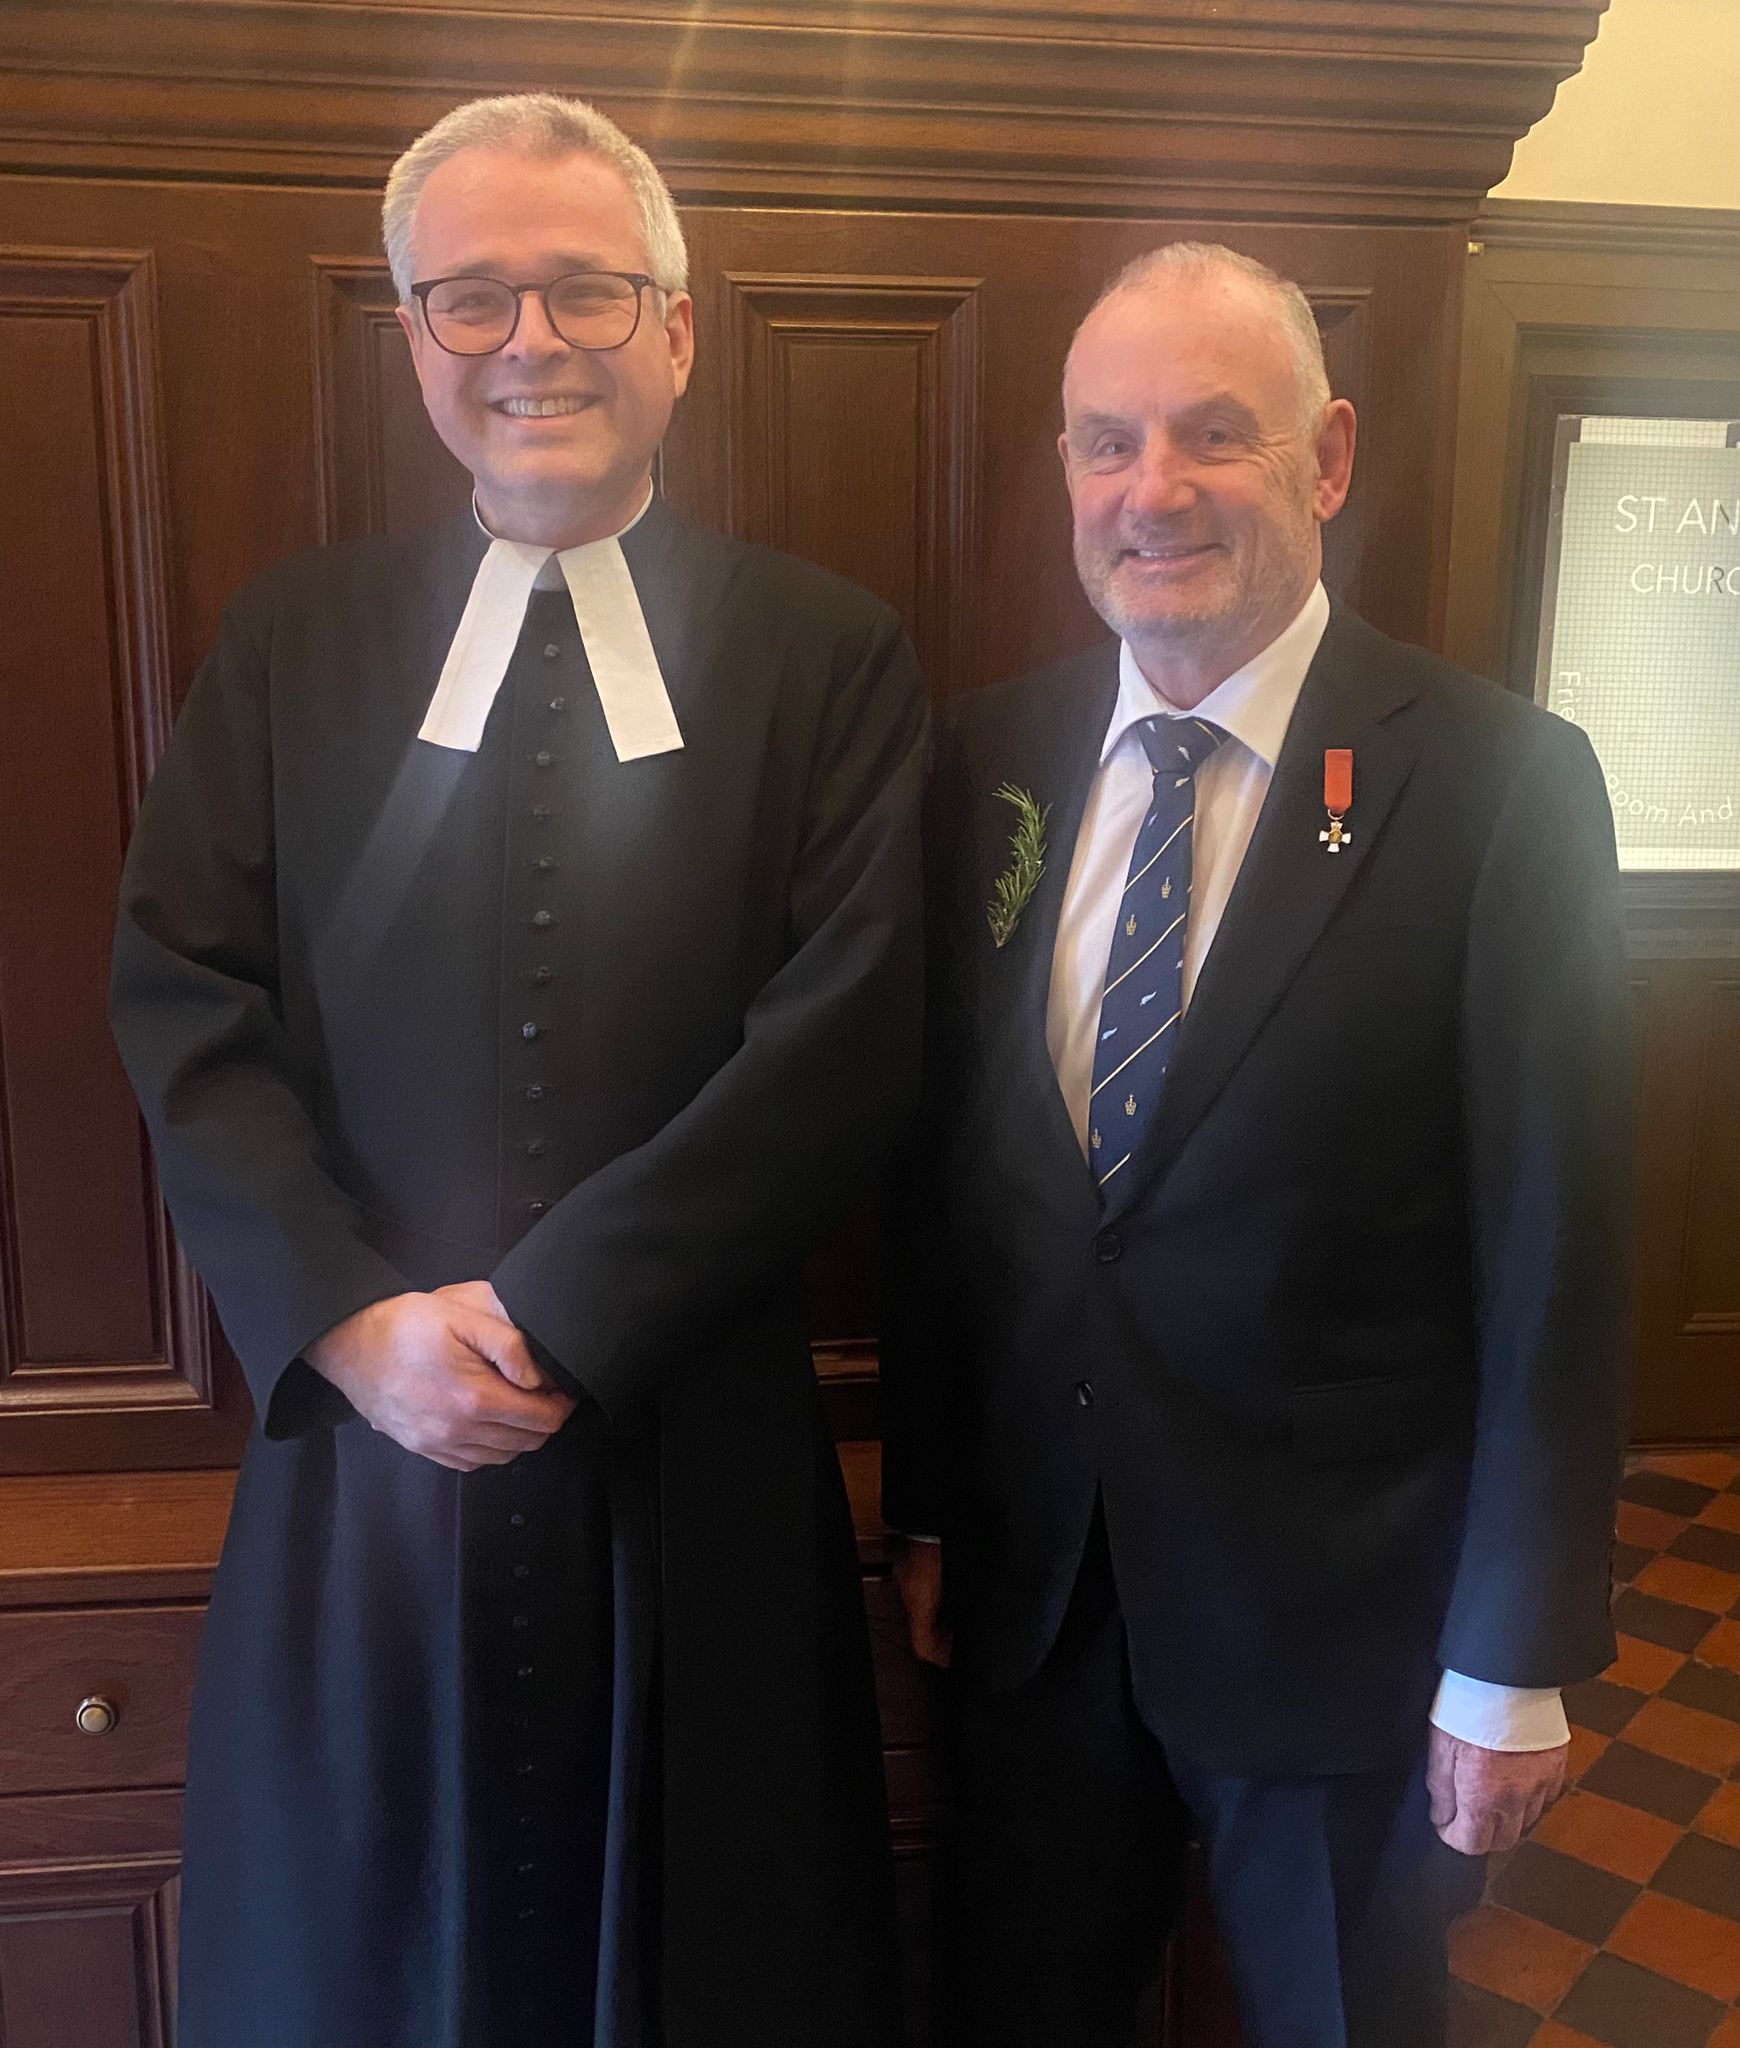 The Revd Canon Paul Arbuthnot and the New Zealand Ambassador Sir Trevor Mallard.